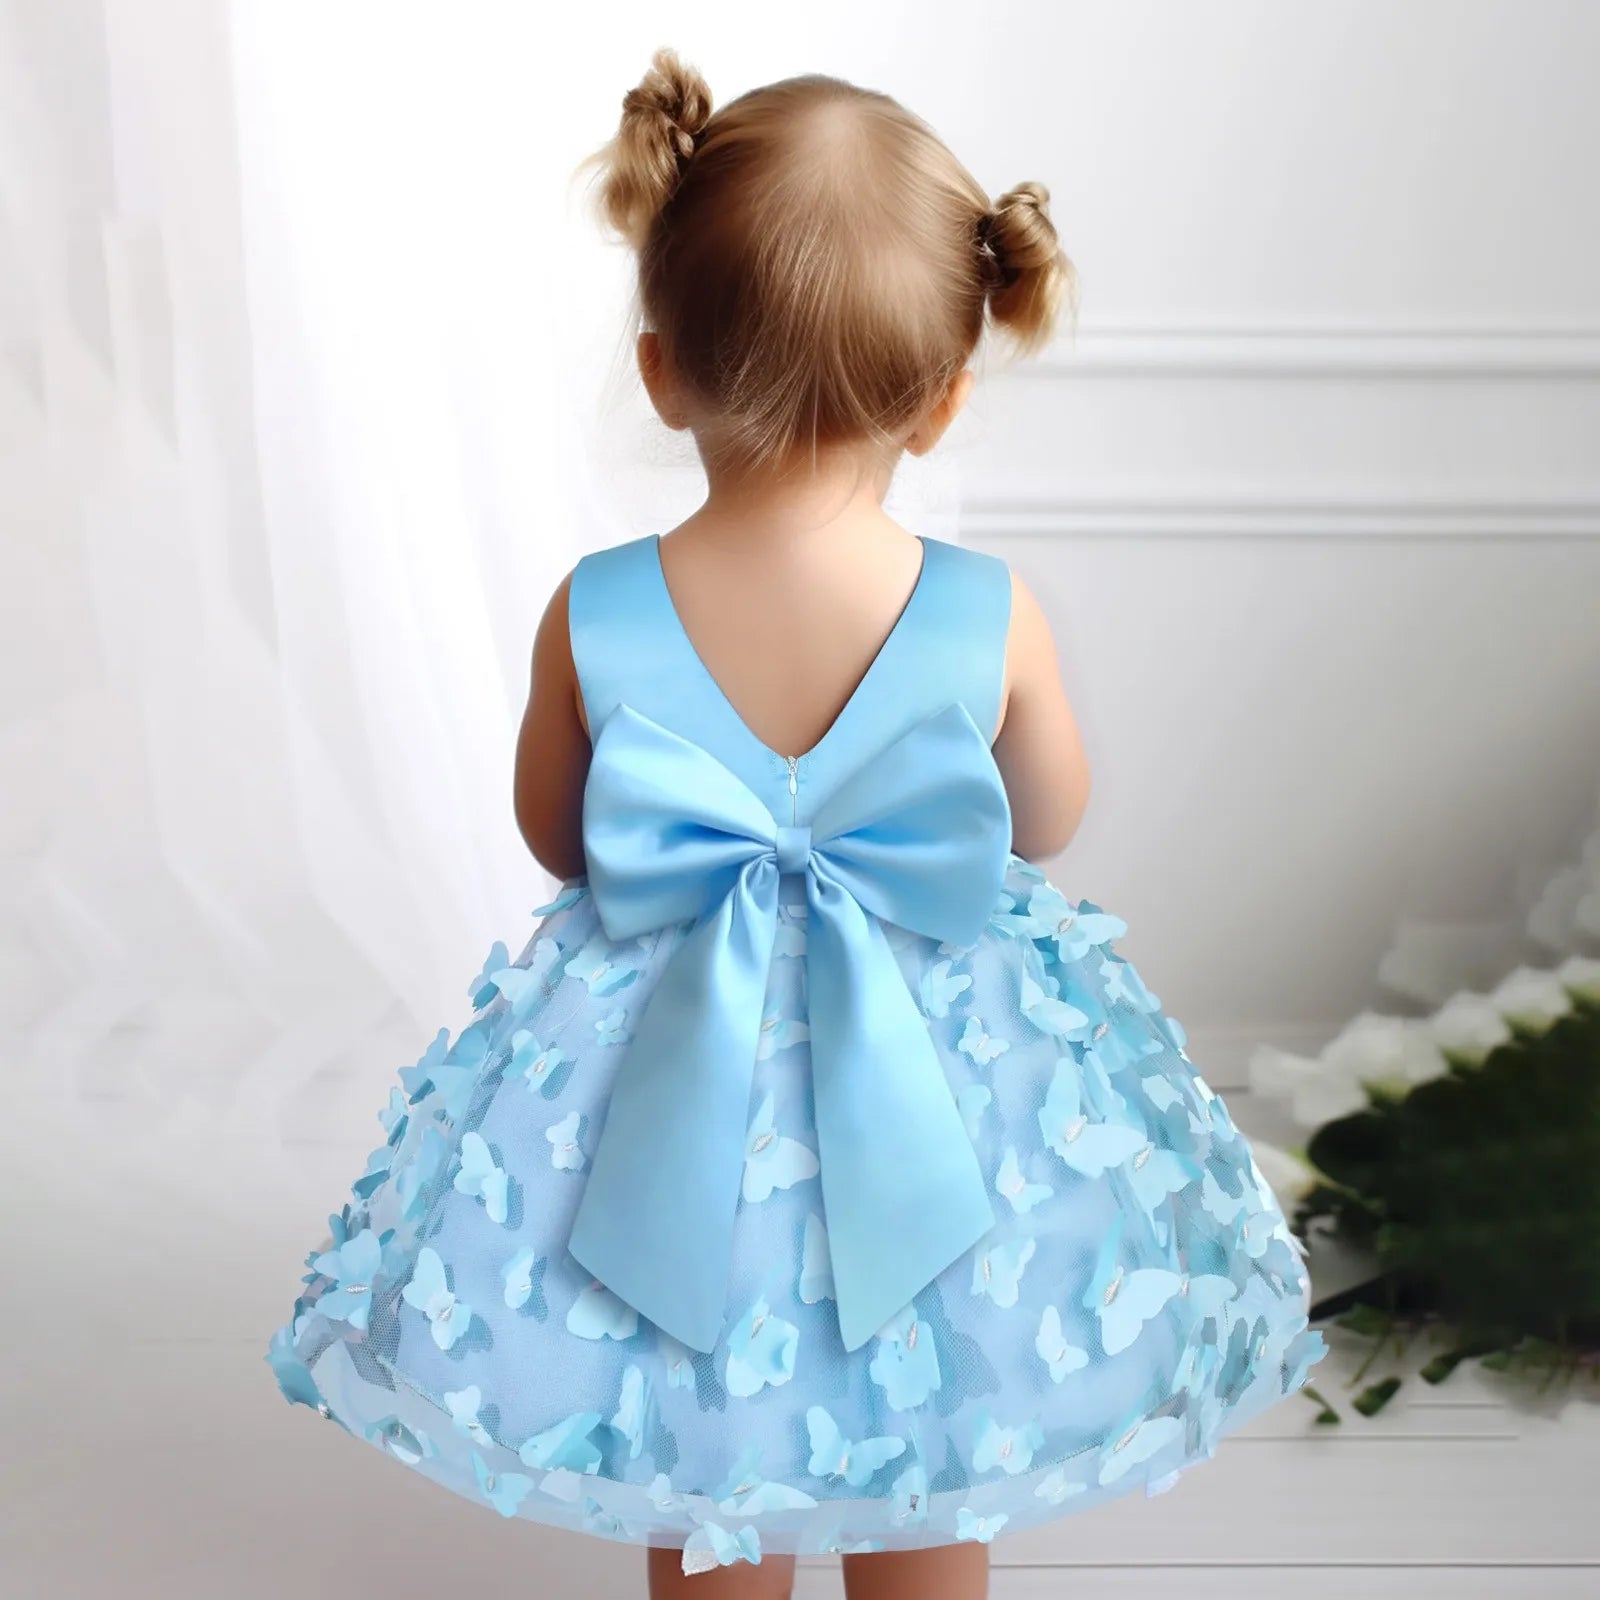 Infant Sleeveless Birthday Party Dress by Baby Minaj Cruz